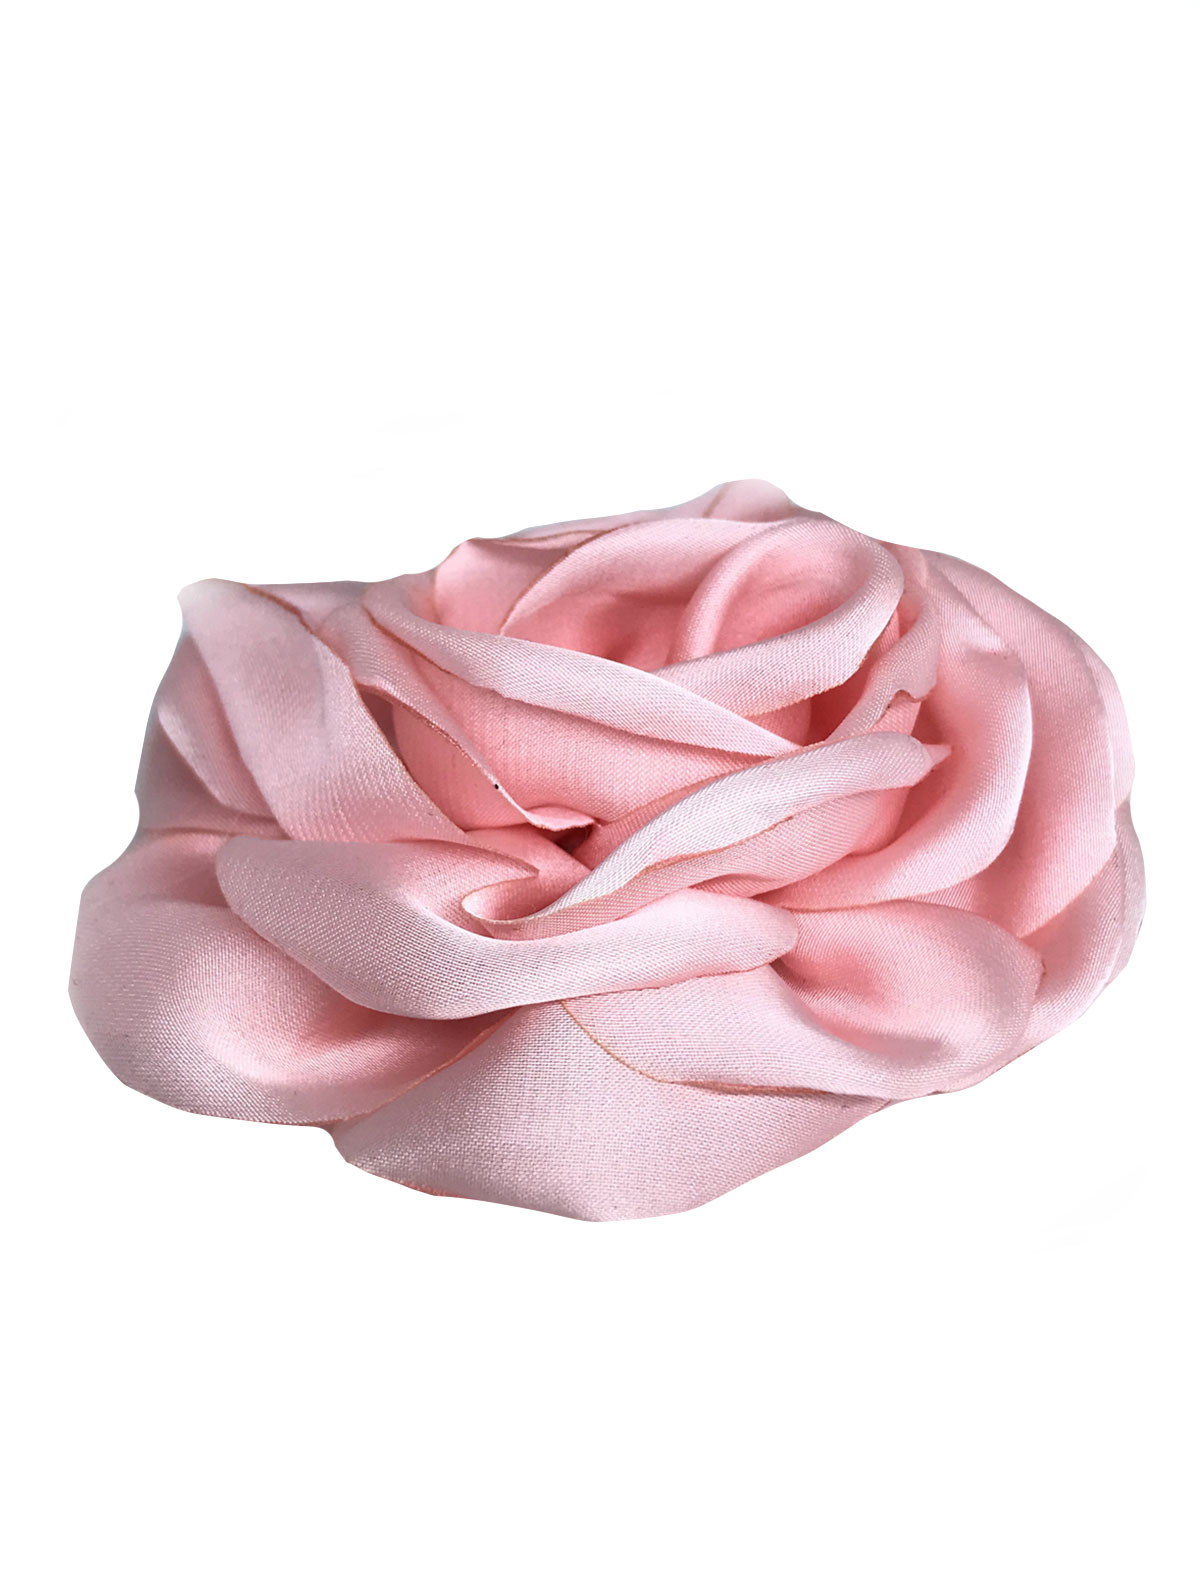 Заколка Junefee розового цвета